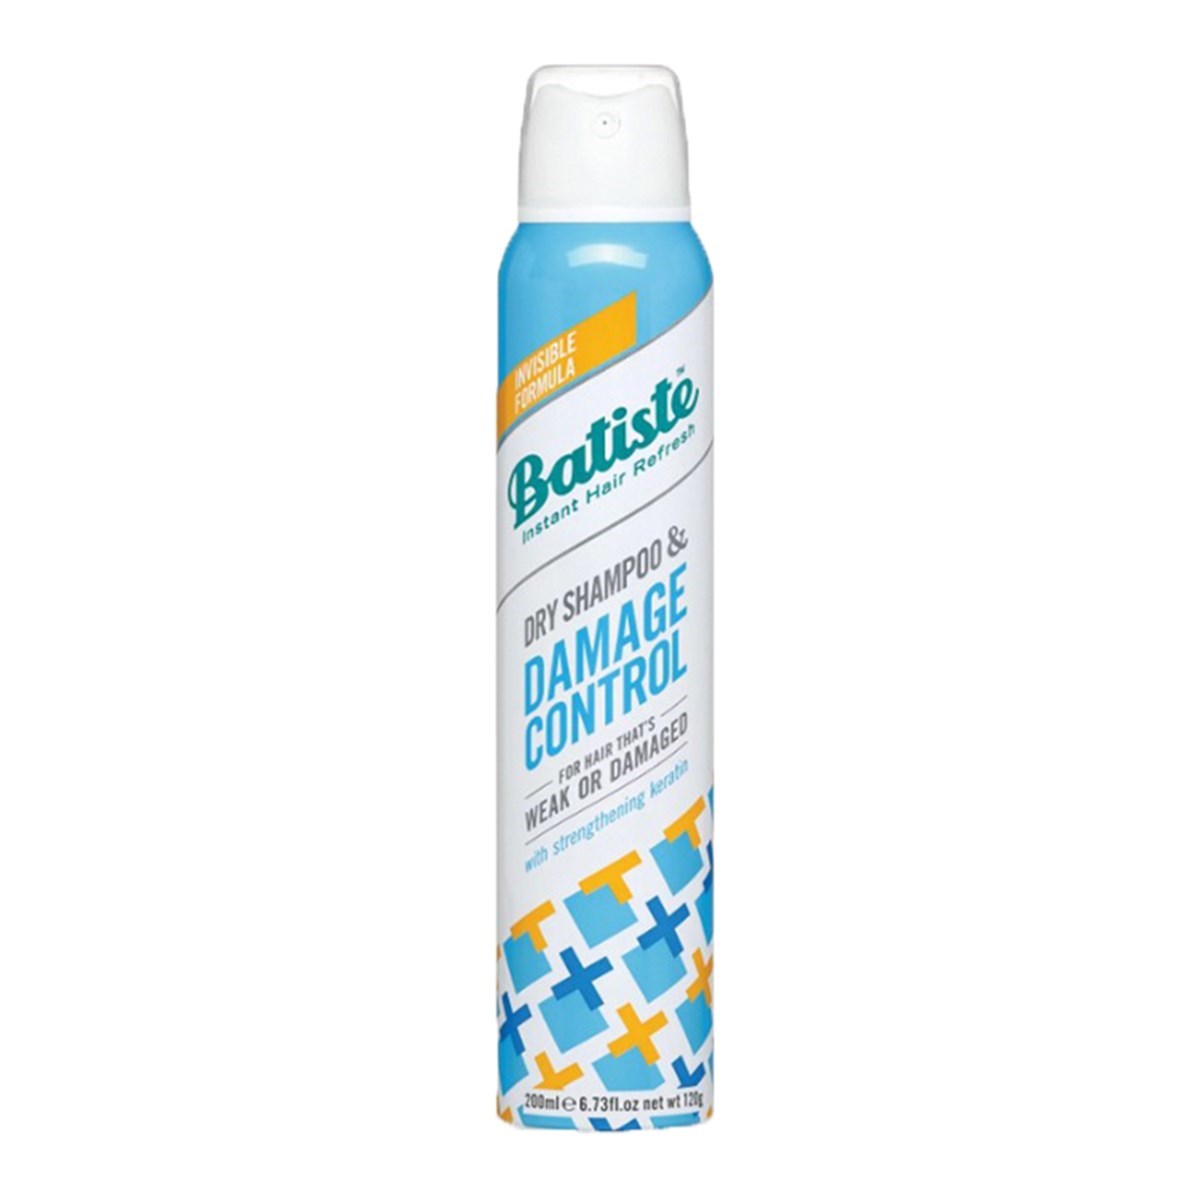 BATİSTE Dry Shampoo Damage Control 200ml Yıpranma Karşıtı Kuru Şampuan |  Farma Ucuz